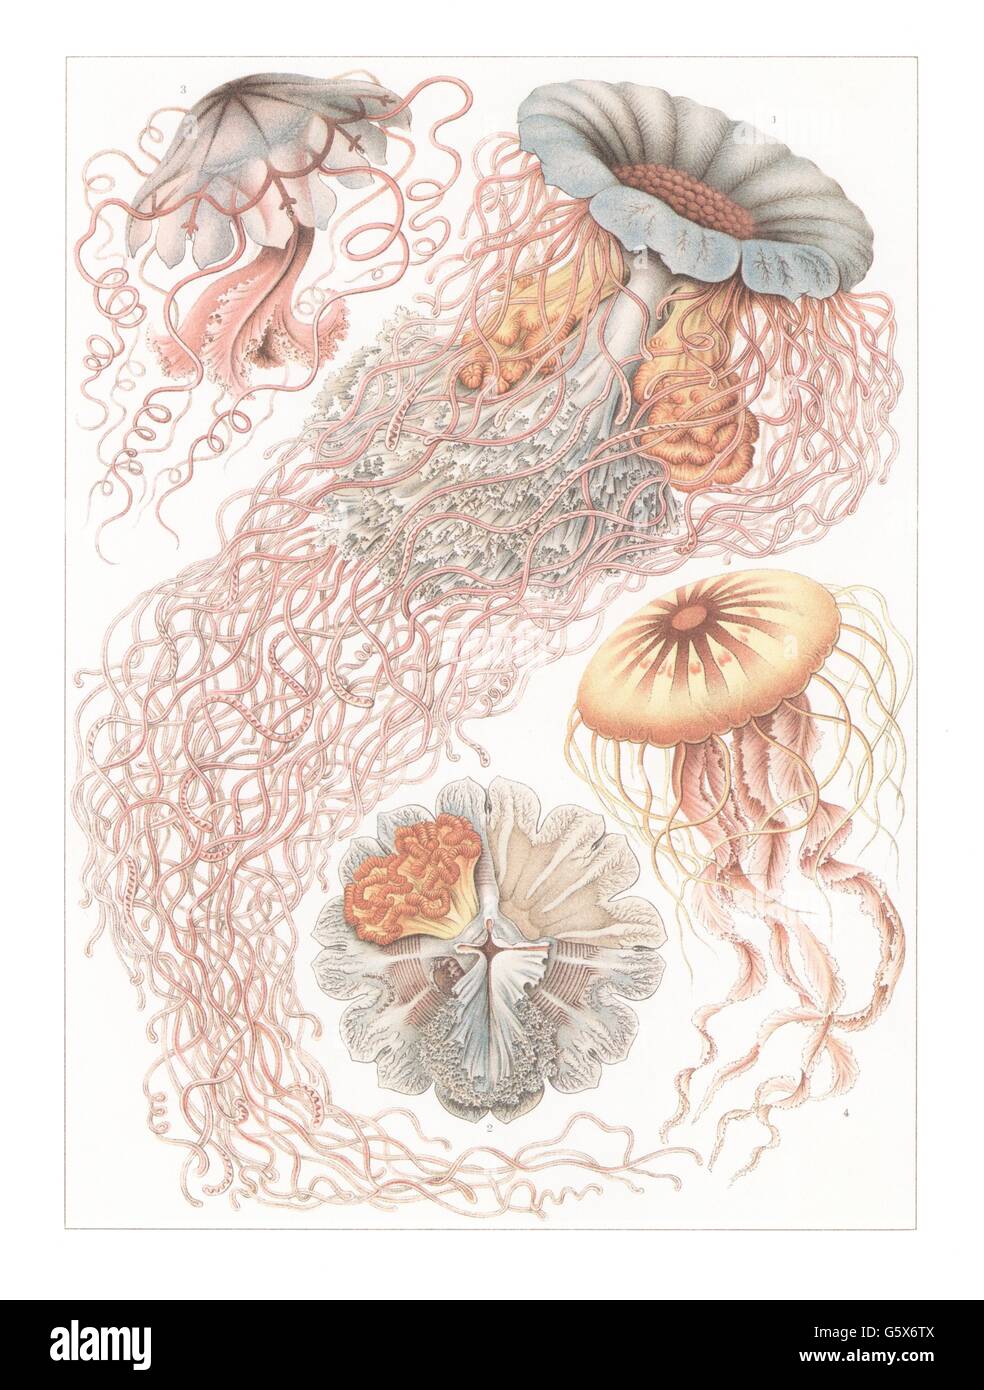 zoology / animals, cnidaria, true jellyfish (Scyphozoa), flag jellyfish (Semaeostomeae), Desmonema annasethe, lithograph, 'Artforms of Nature' 'Kunstformen der Natur' by Ernst Haeckel, 1899 - 1904, Additional-Rights-Clearences-Not Available Stock Photo